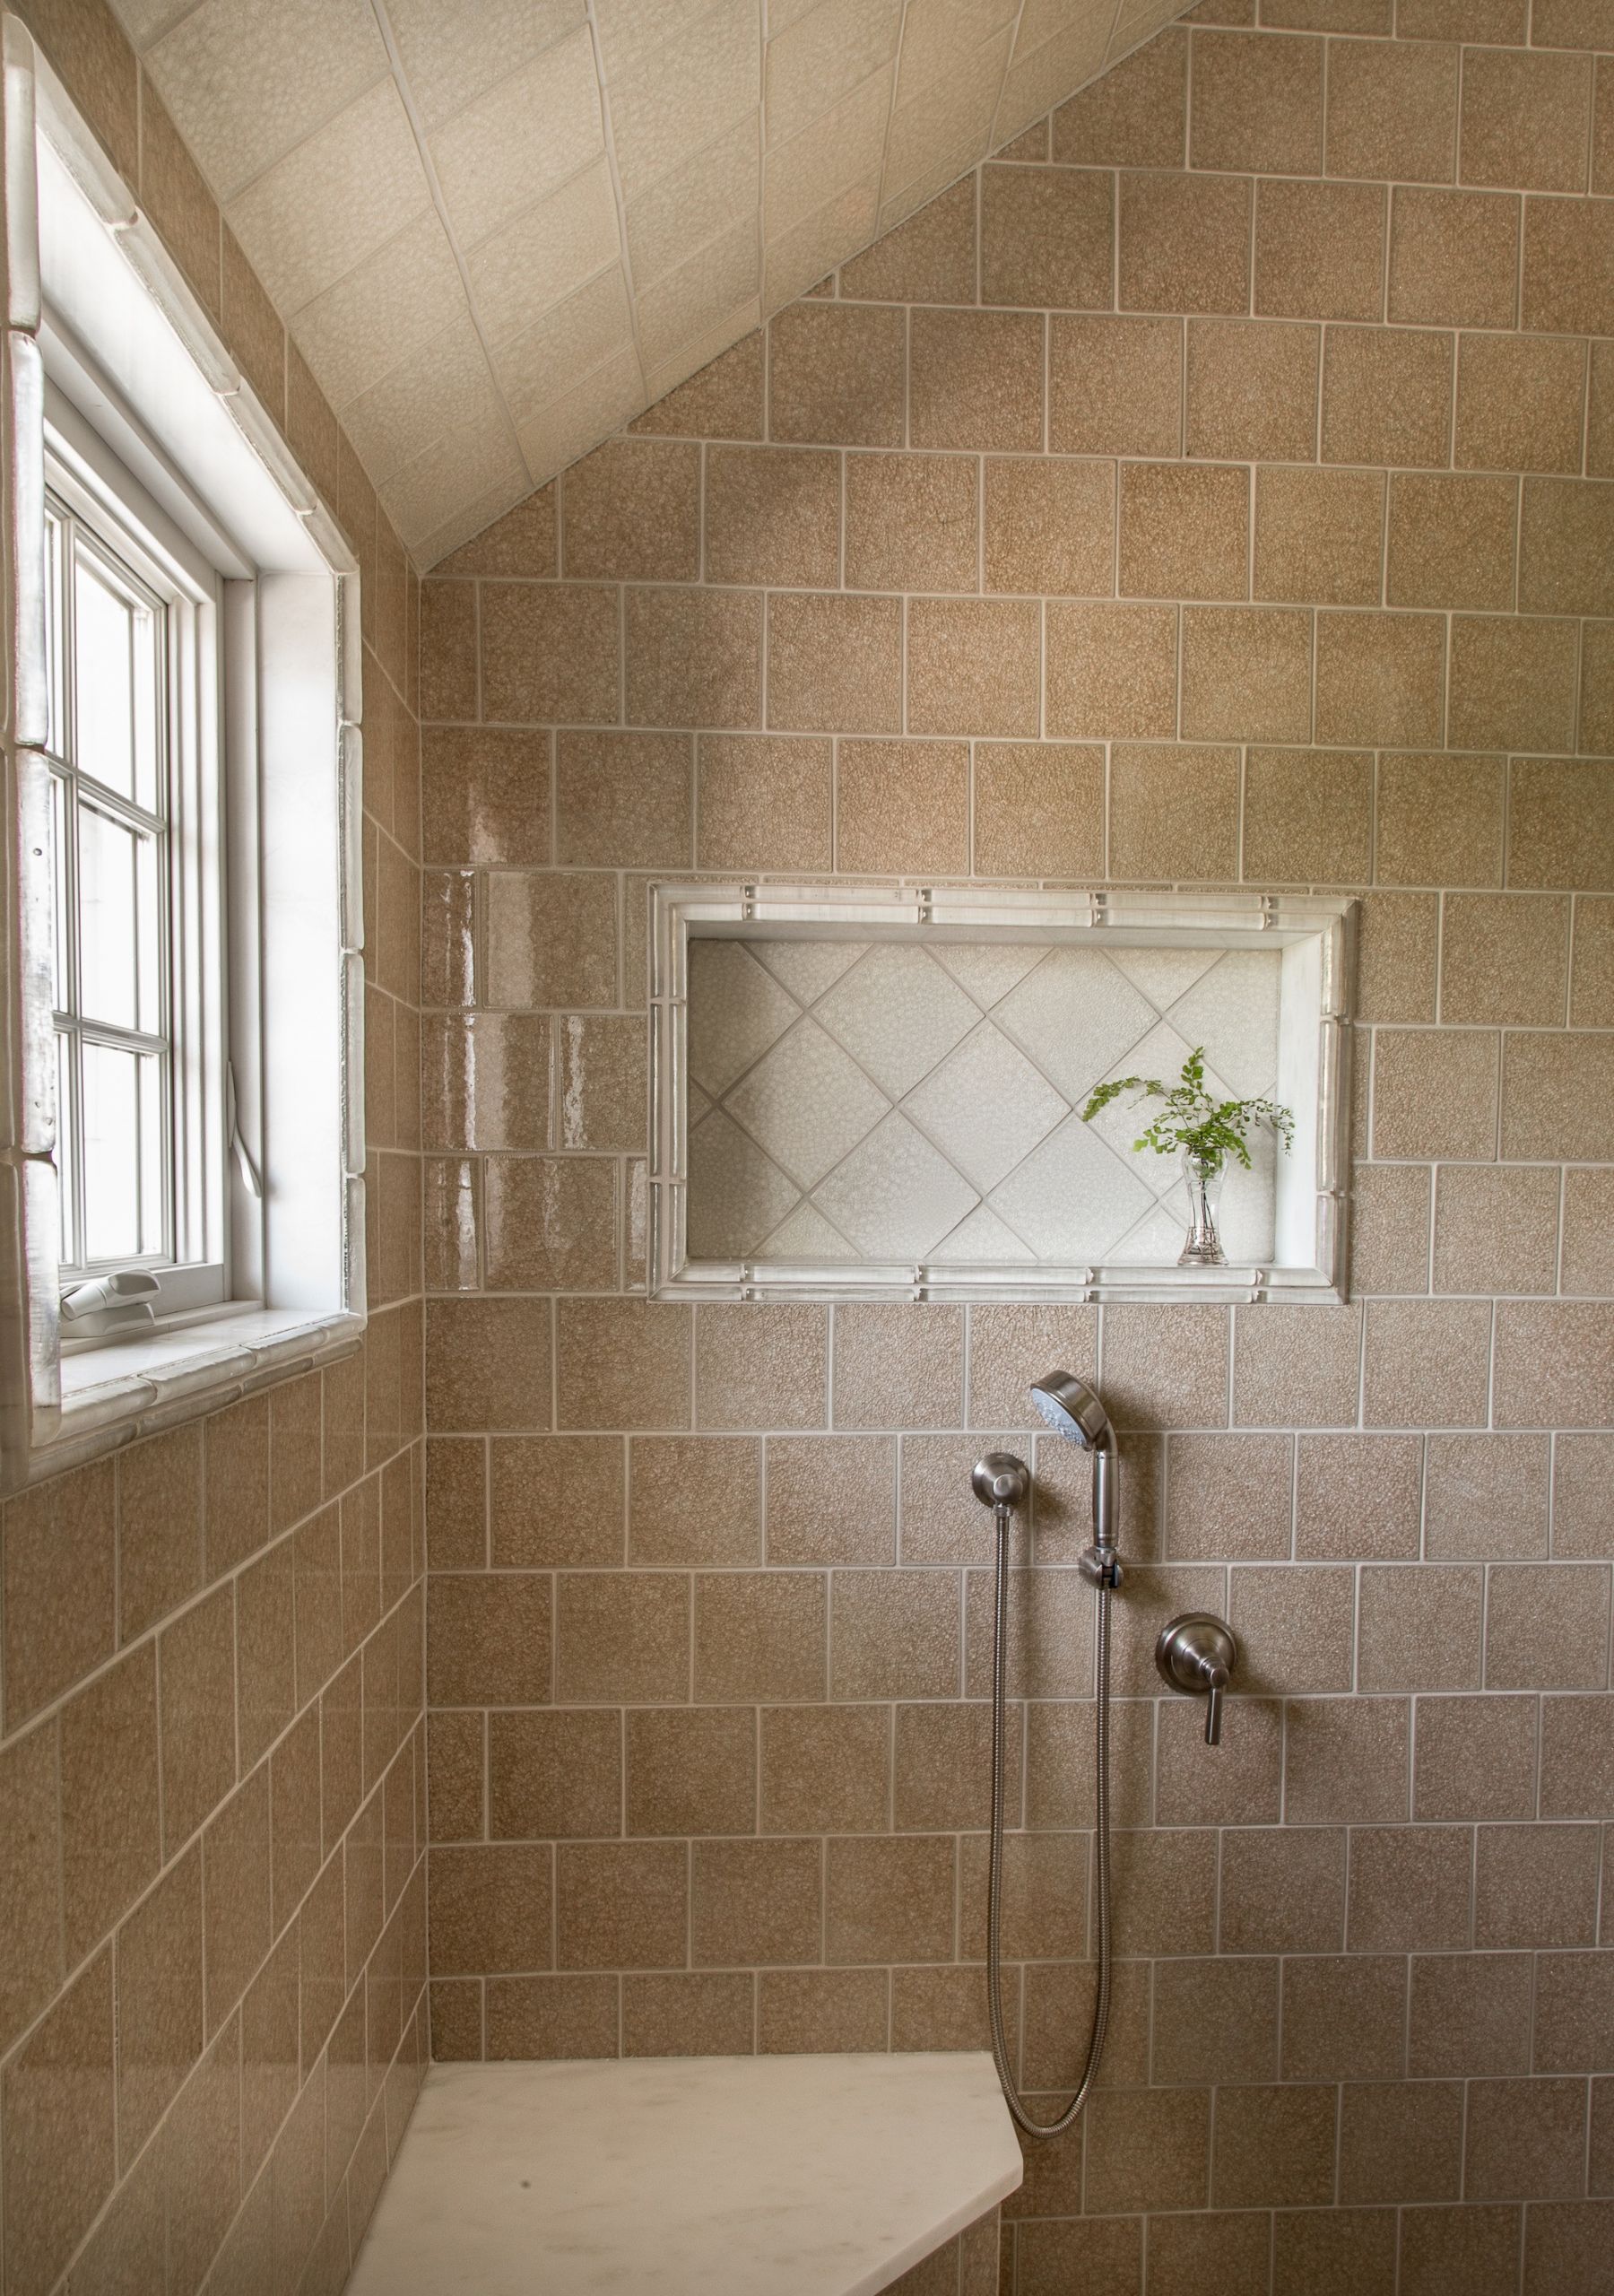 Bathroom Tiles Designs
 Top Ten Trends in Tile and Stone Designs